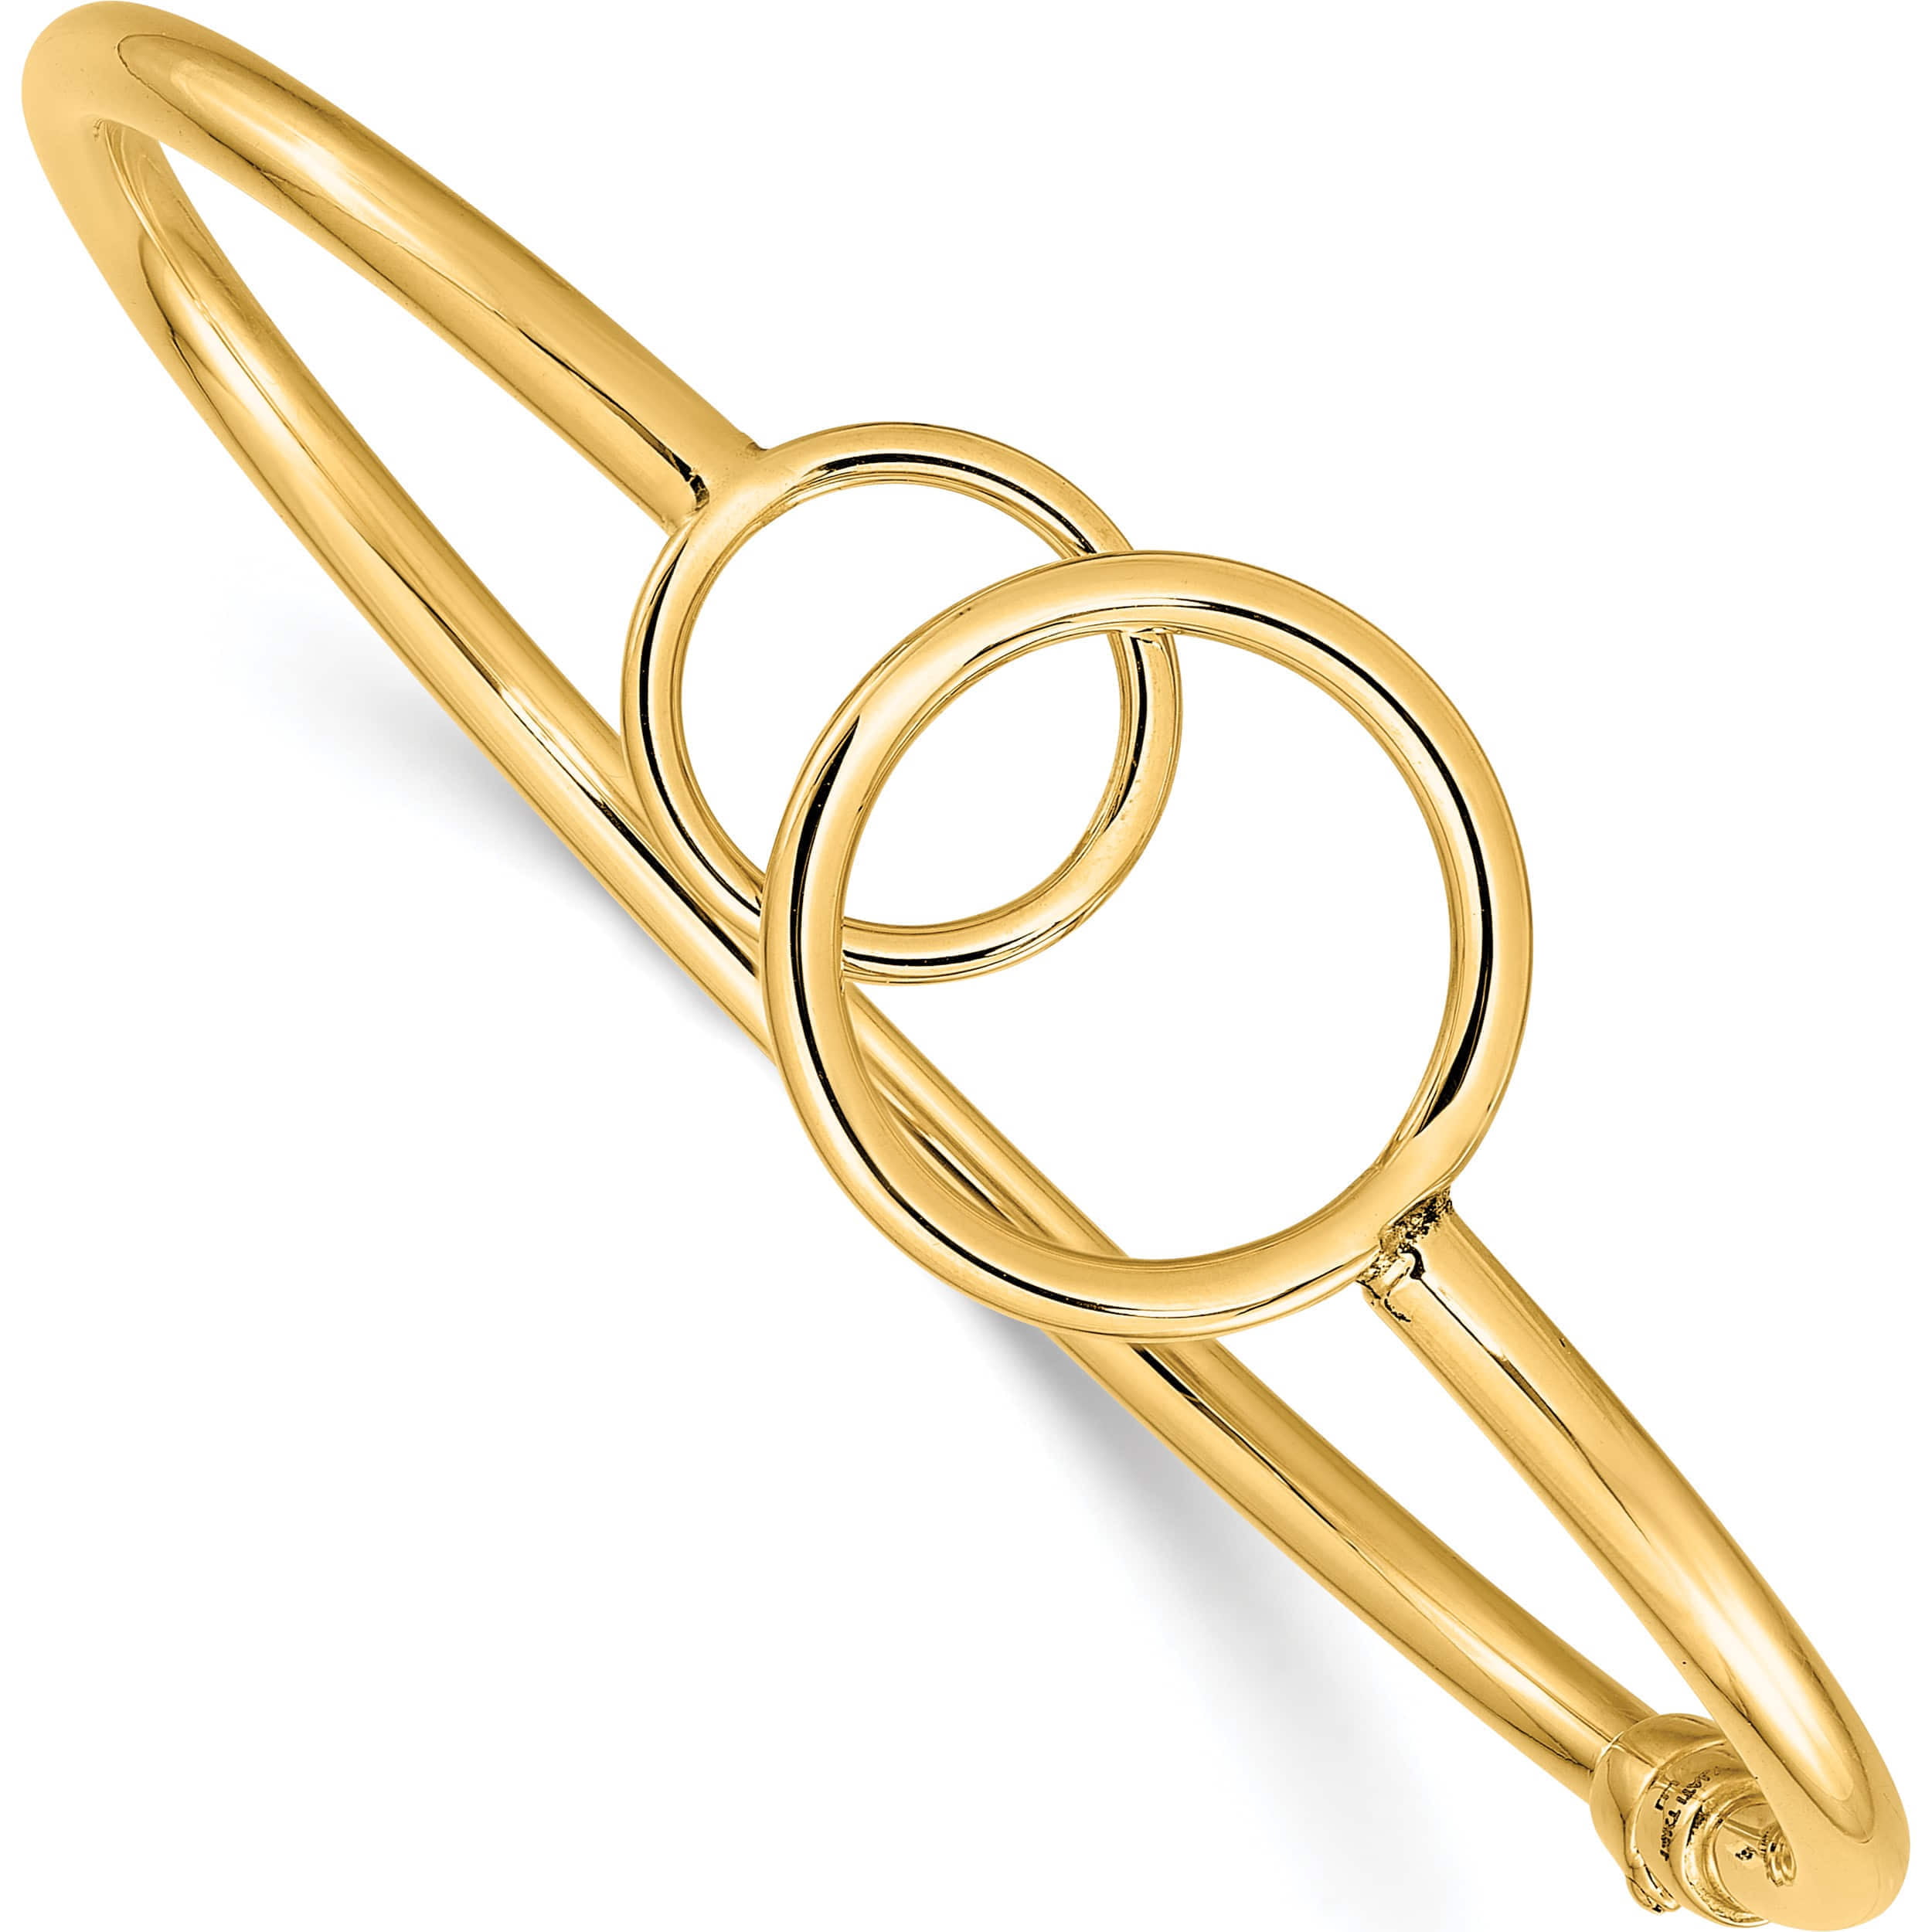 Buy JHB Gold plated Brass and Bracelet for Women (Golden) at